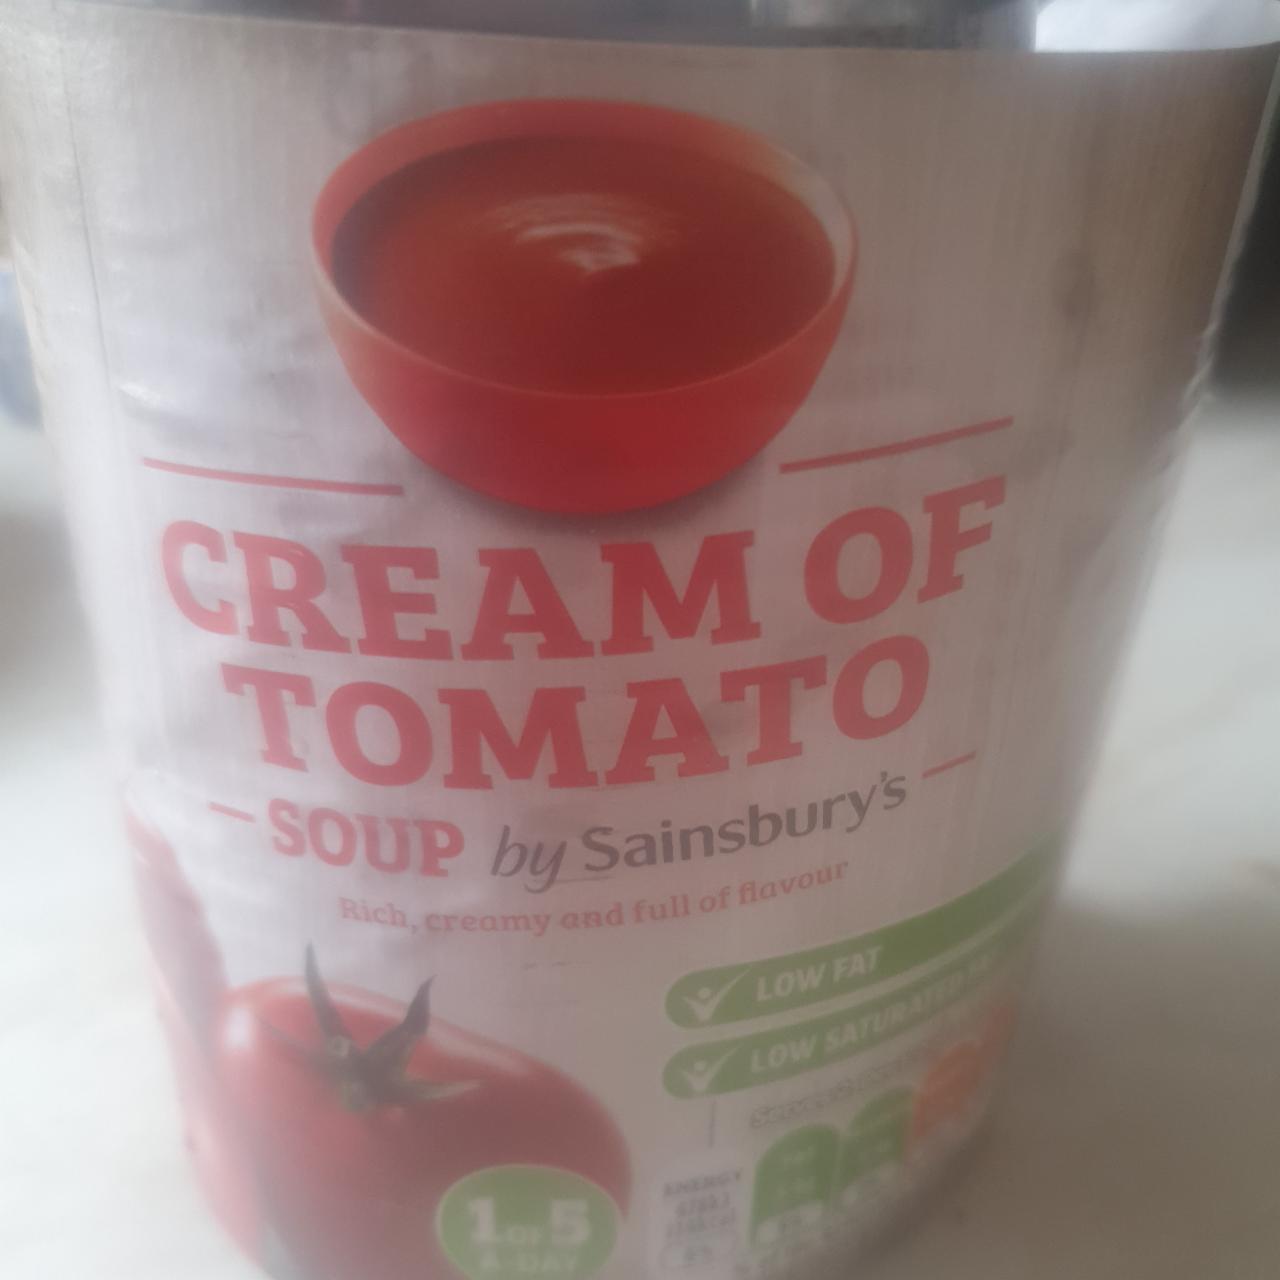 Fotografie - Cream of tomato soup by Sainsbury's